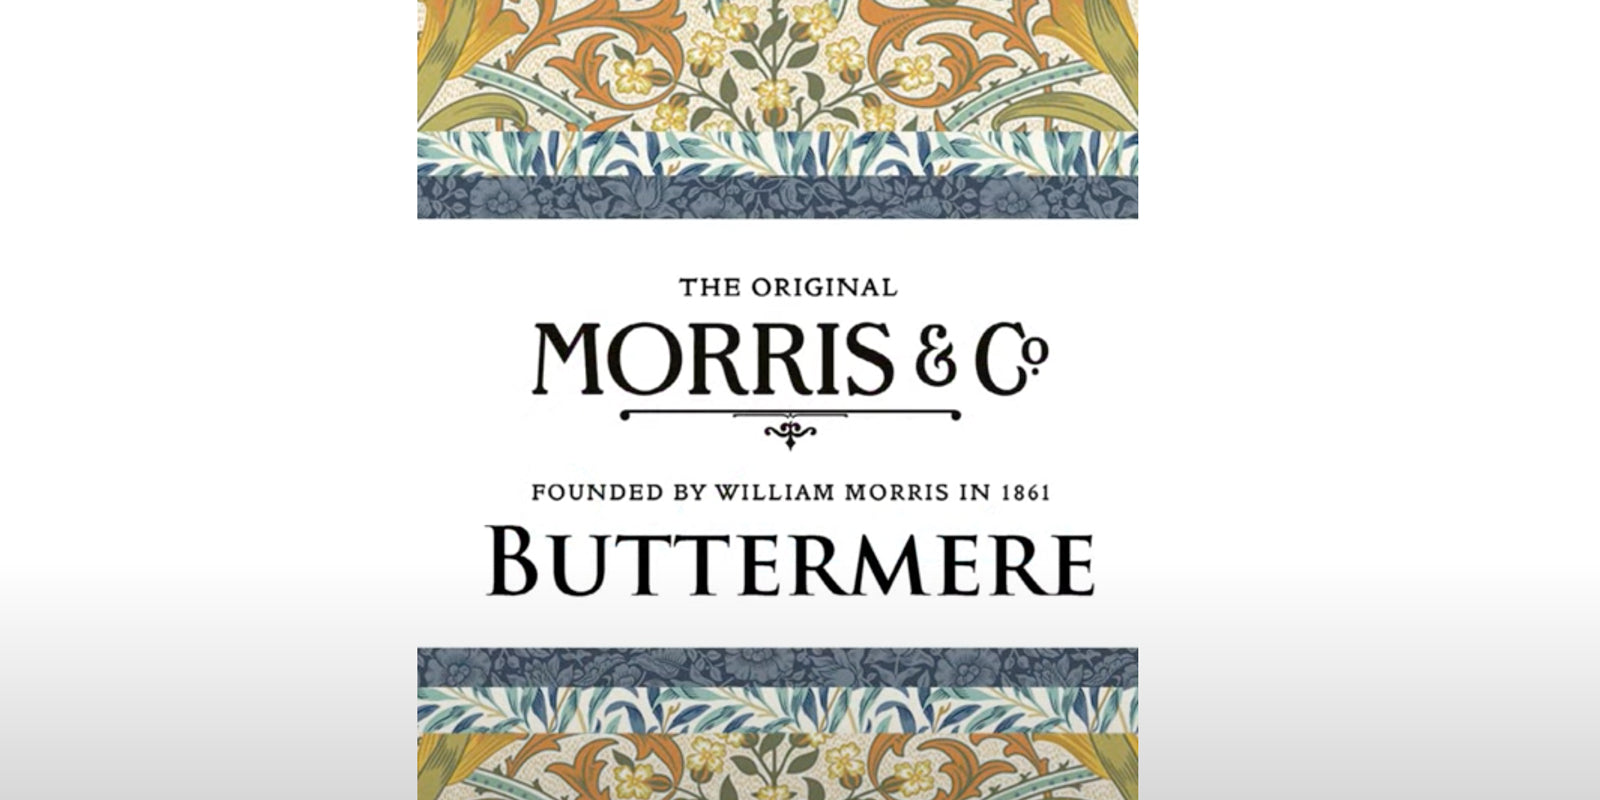 The Original Morris & Co. presents Buttermere